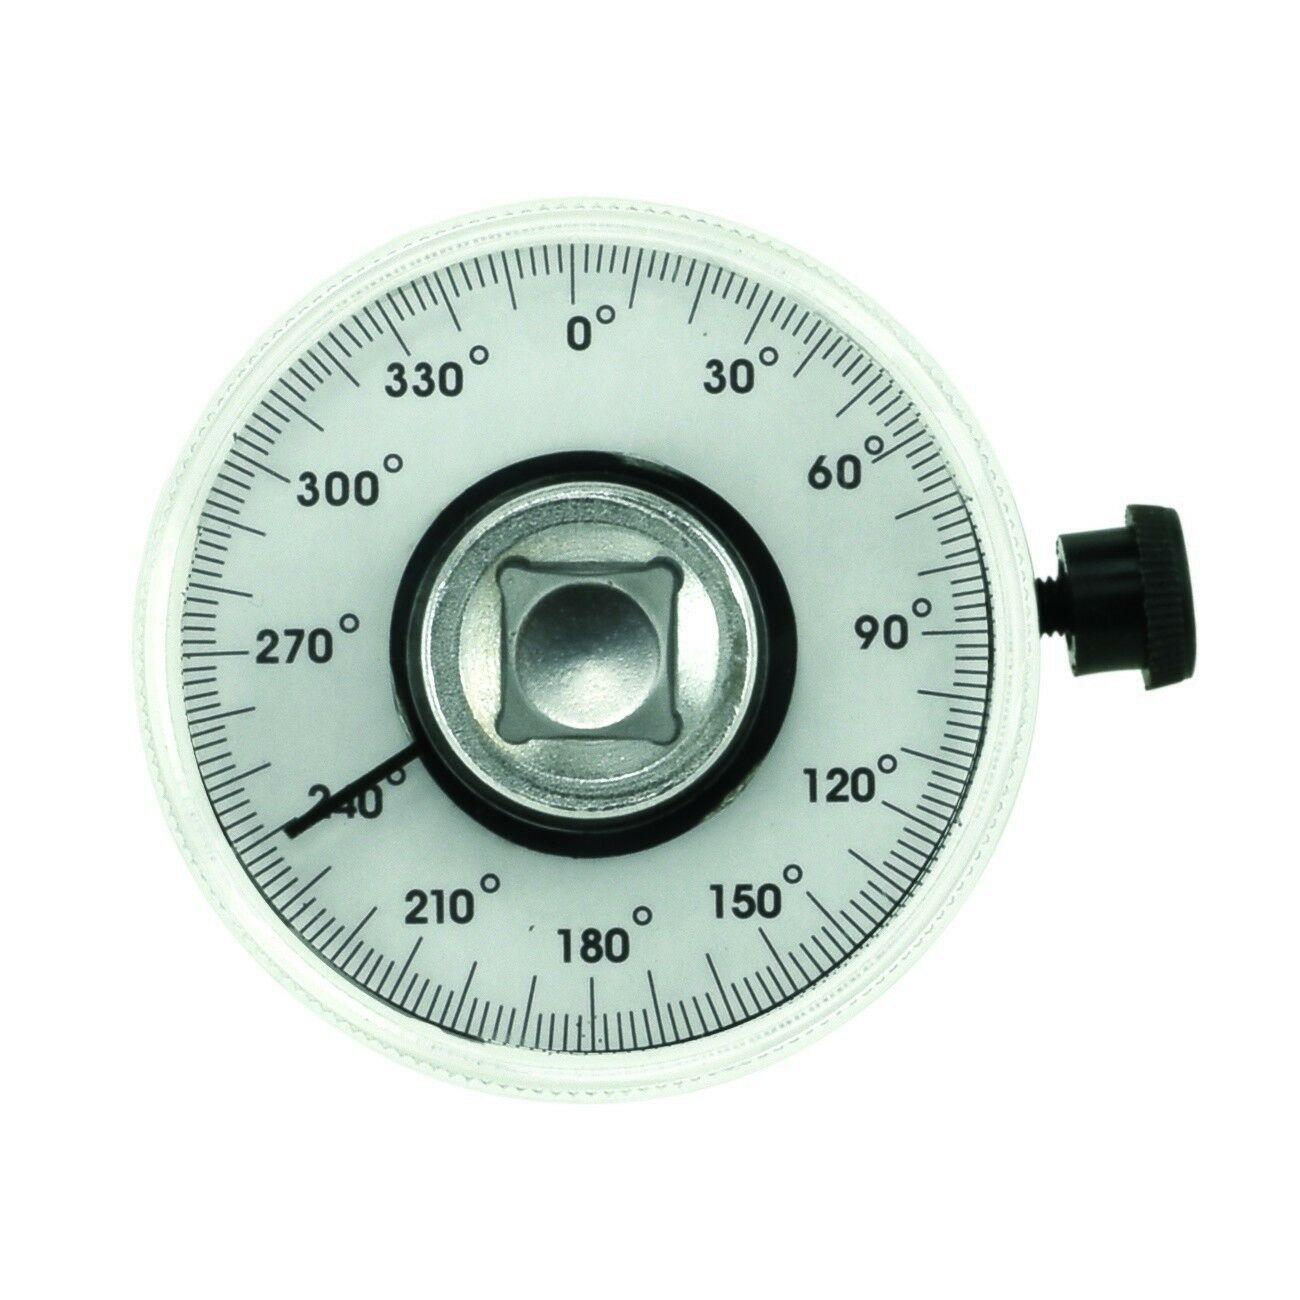 1/2" Angle Meter Measurer Torque Angle Gauge Rotation